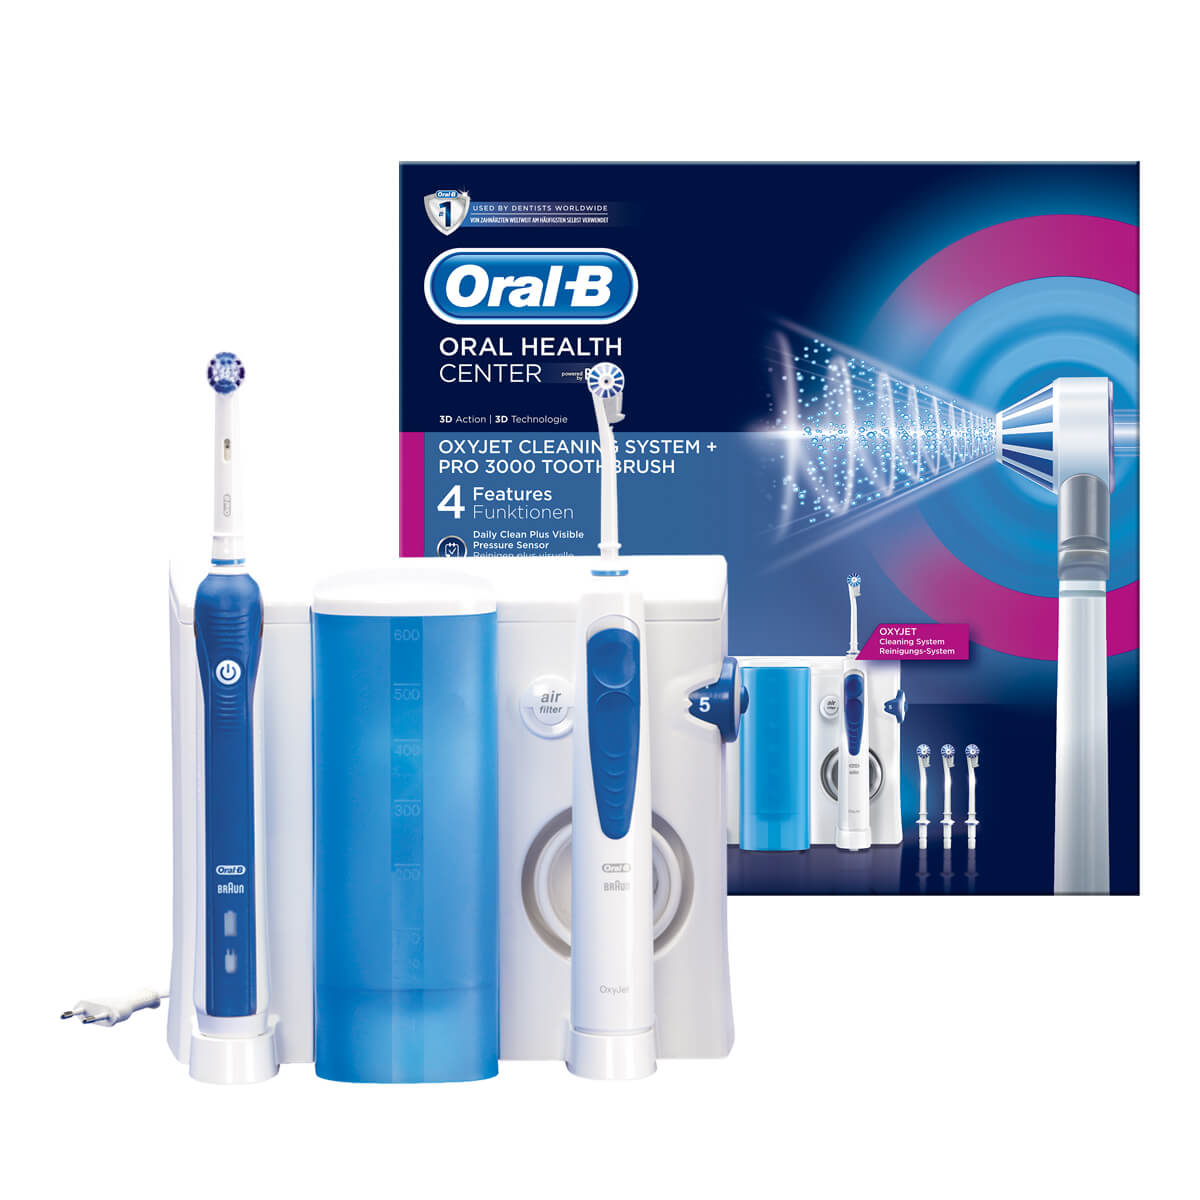 algodón Baya monitor Oral-B Oxyjet + Oral-B Pro 3000 electric toothbrush